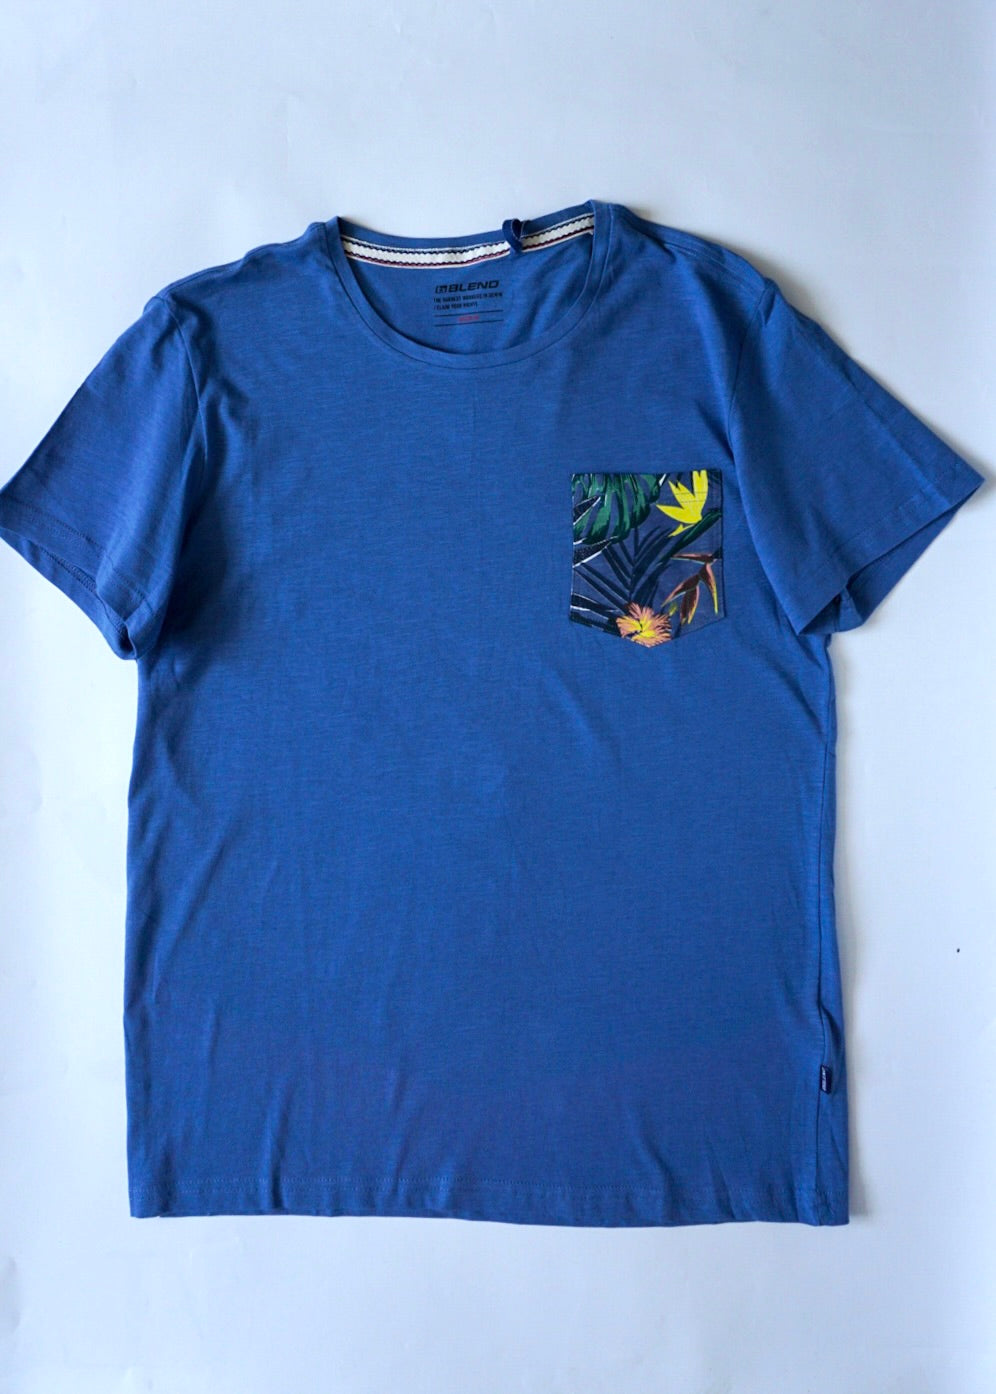 True blue men's short sleeve t-shirt with colourful summer pattern left chest pocket detail.